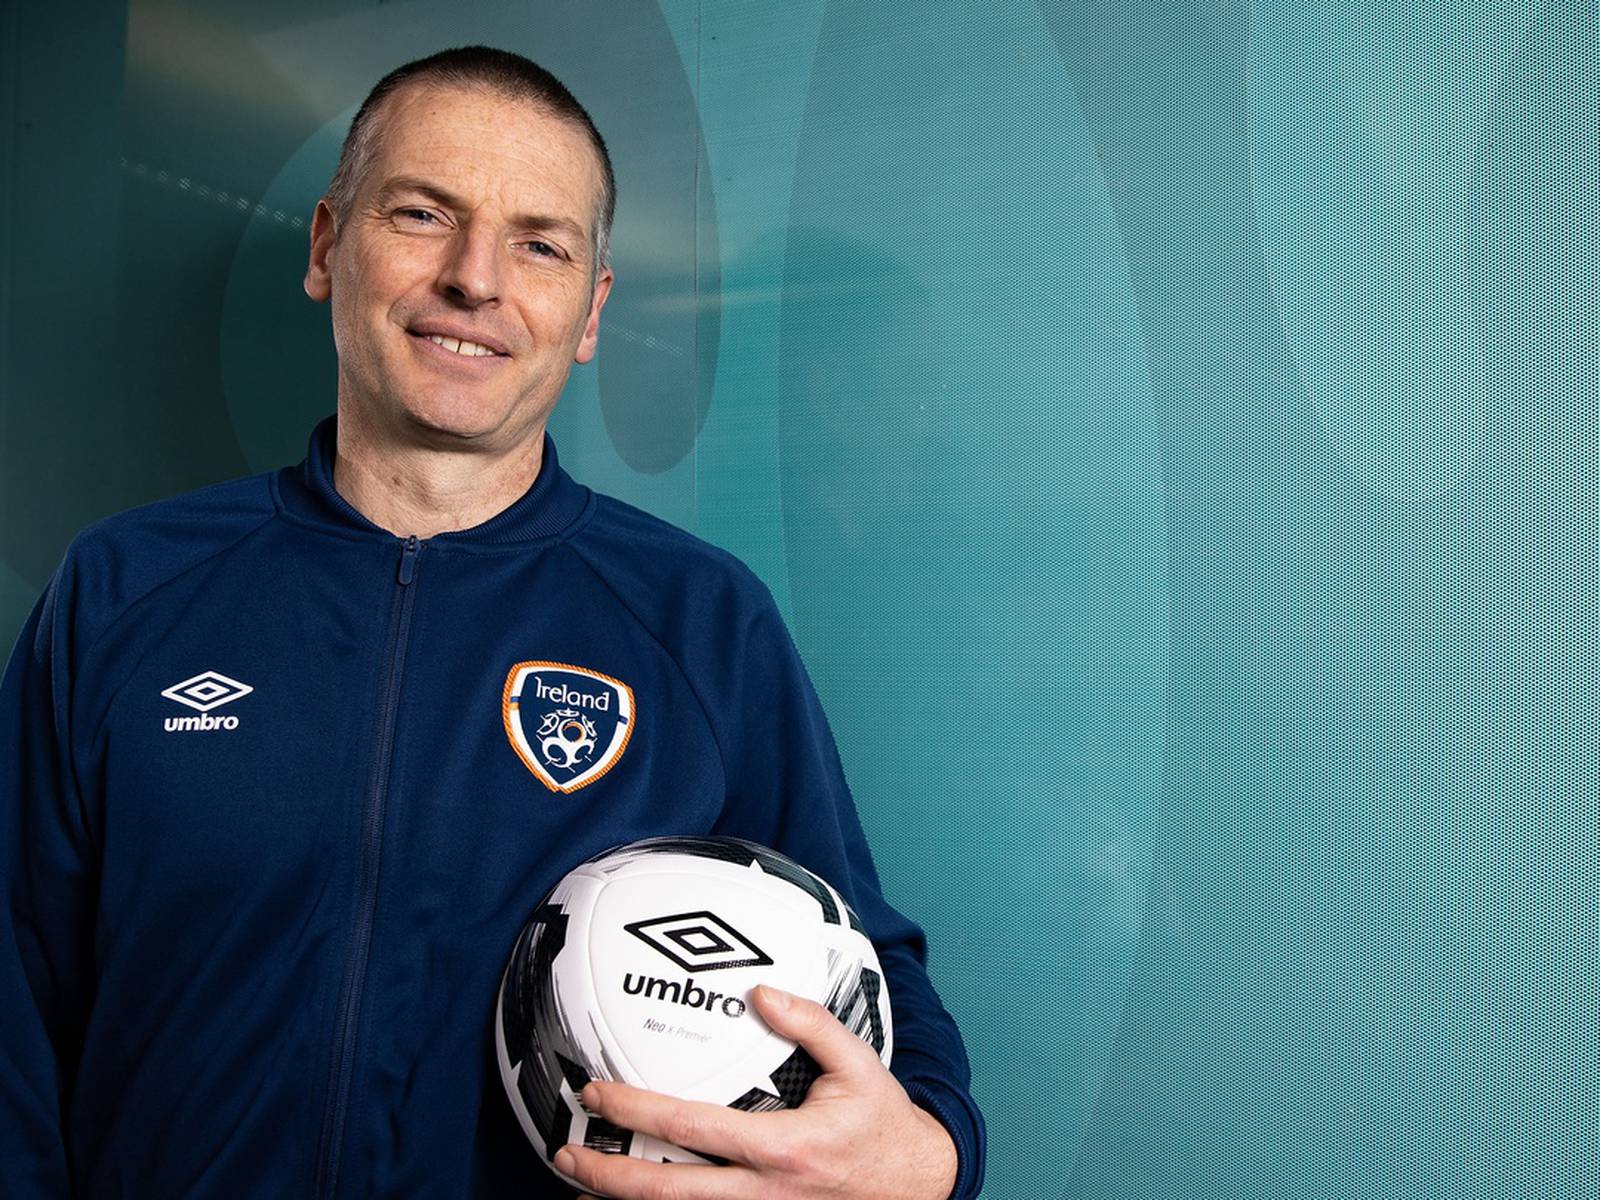 Precocious talent Ferguson included in Ireland U-21 squad – The Irish Times